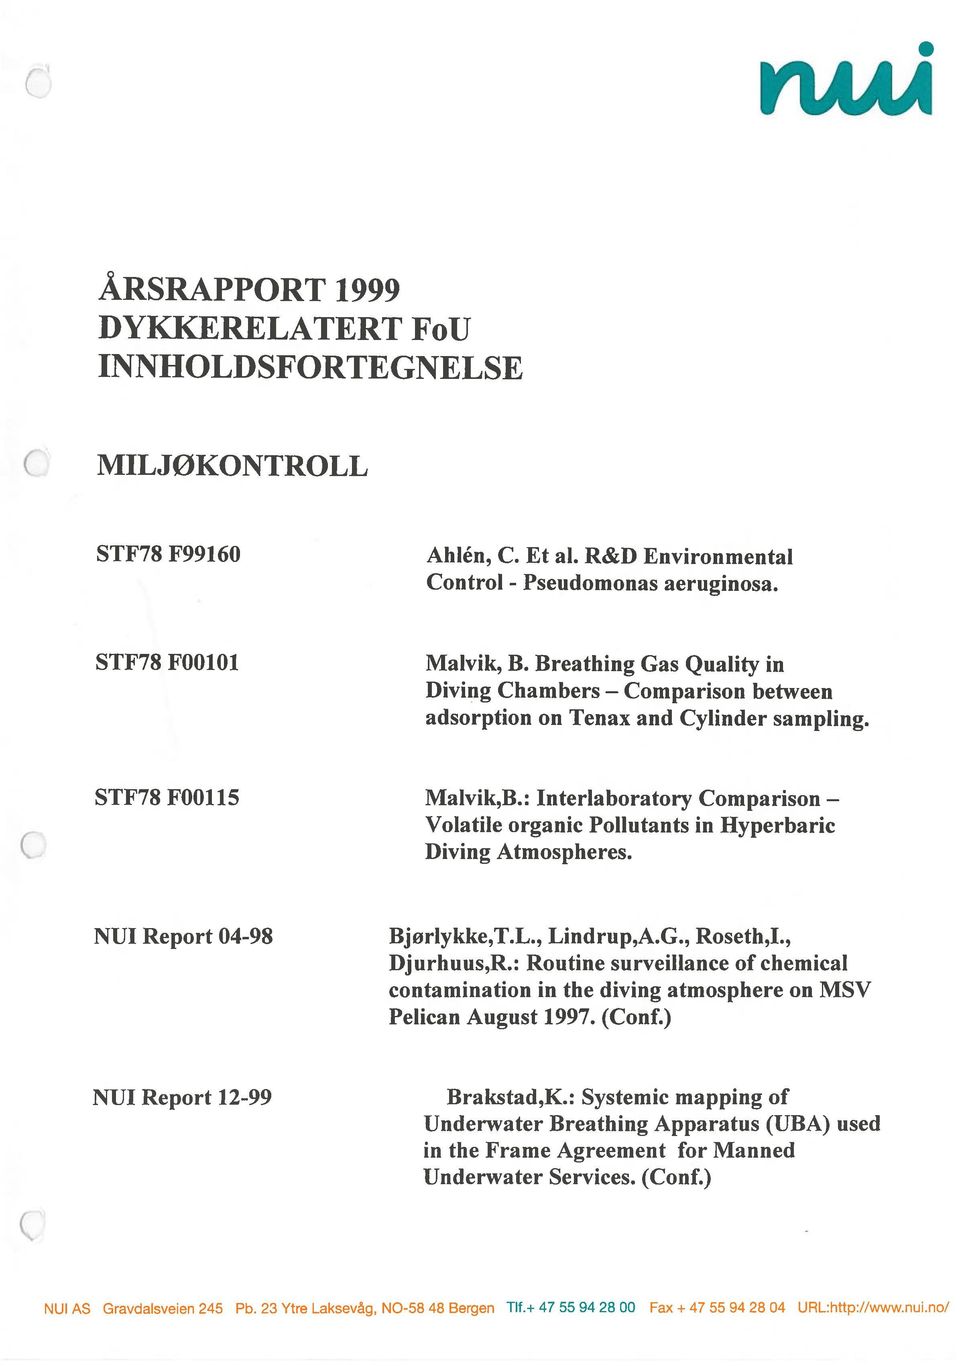 : Intertaboratory Comparison Votatite organic Poltutants in Hyperbaric Diving Atmospheres. NUI Report 04-98 Bj ortykke,t.l., Lindrup,A.G., Roseth,I., Djurhuus,R.